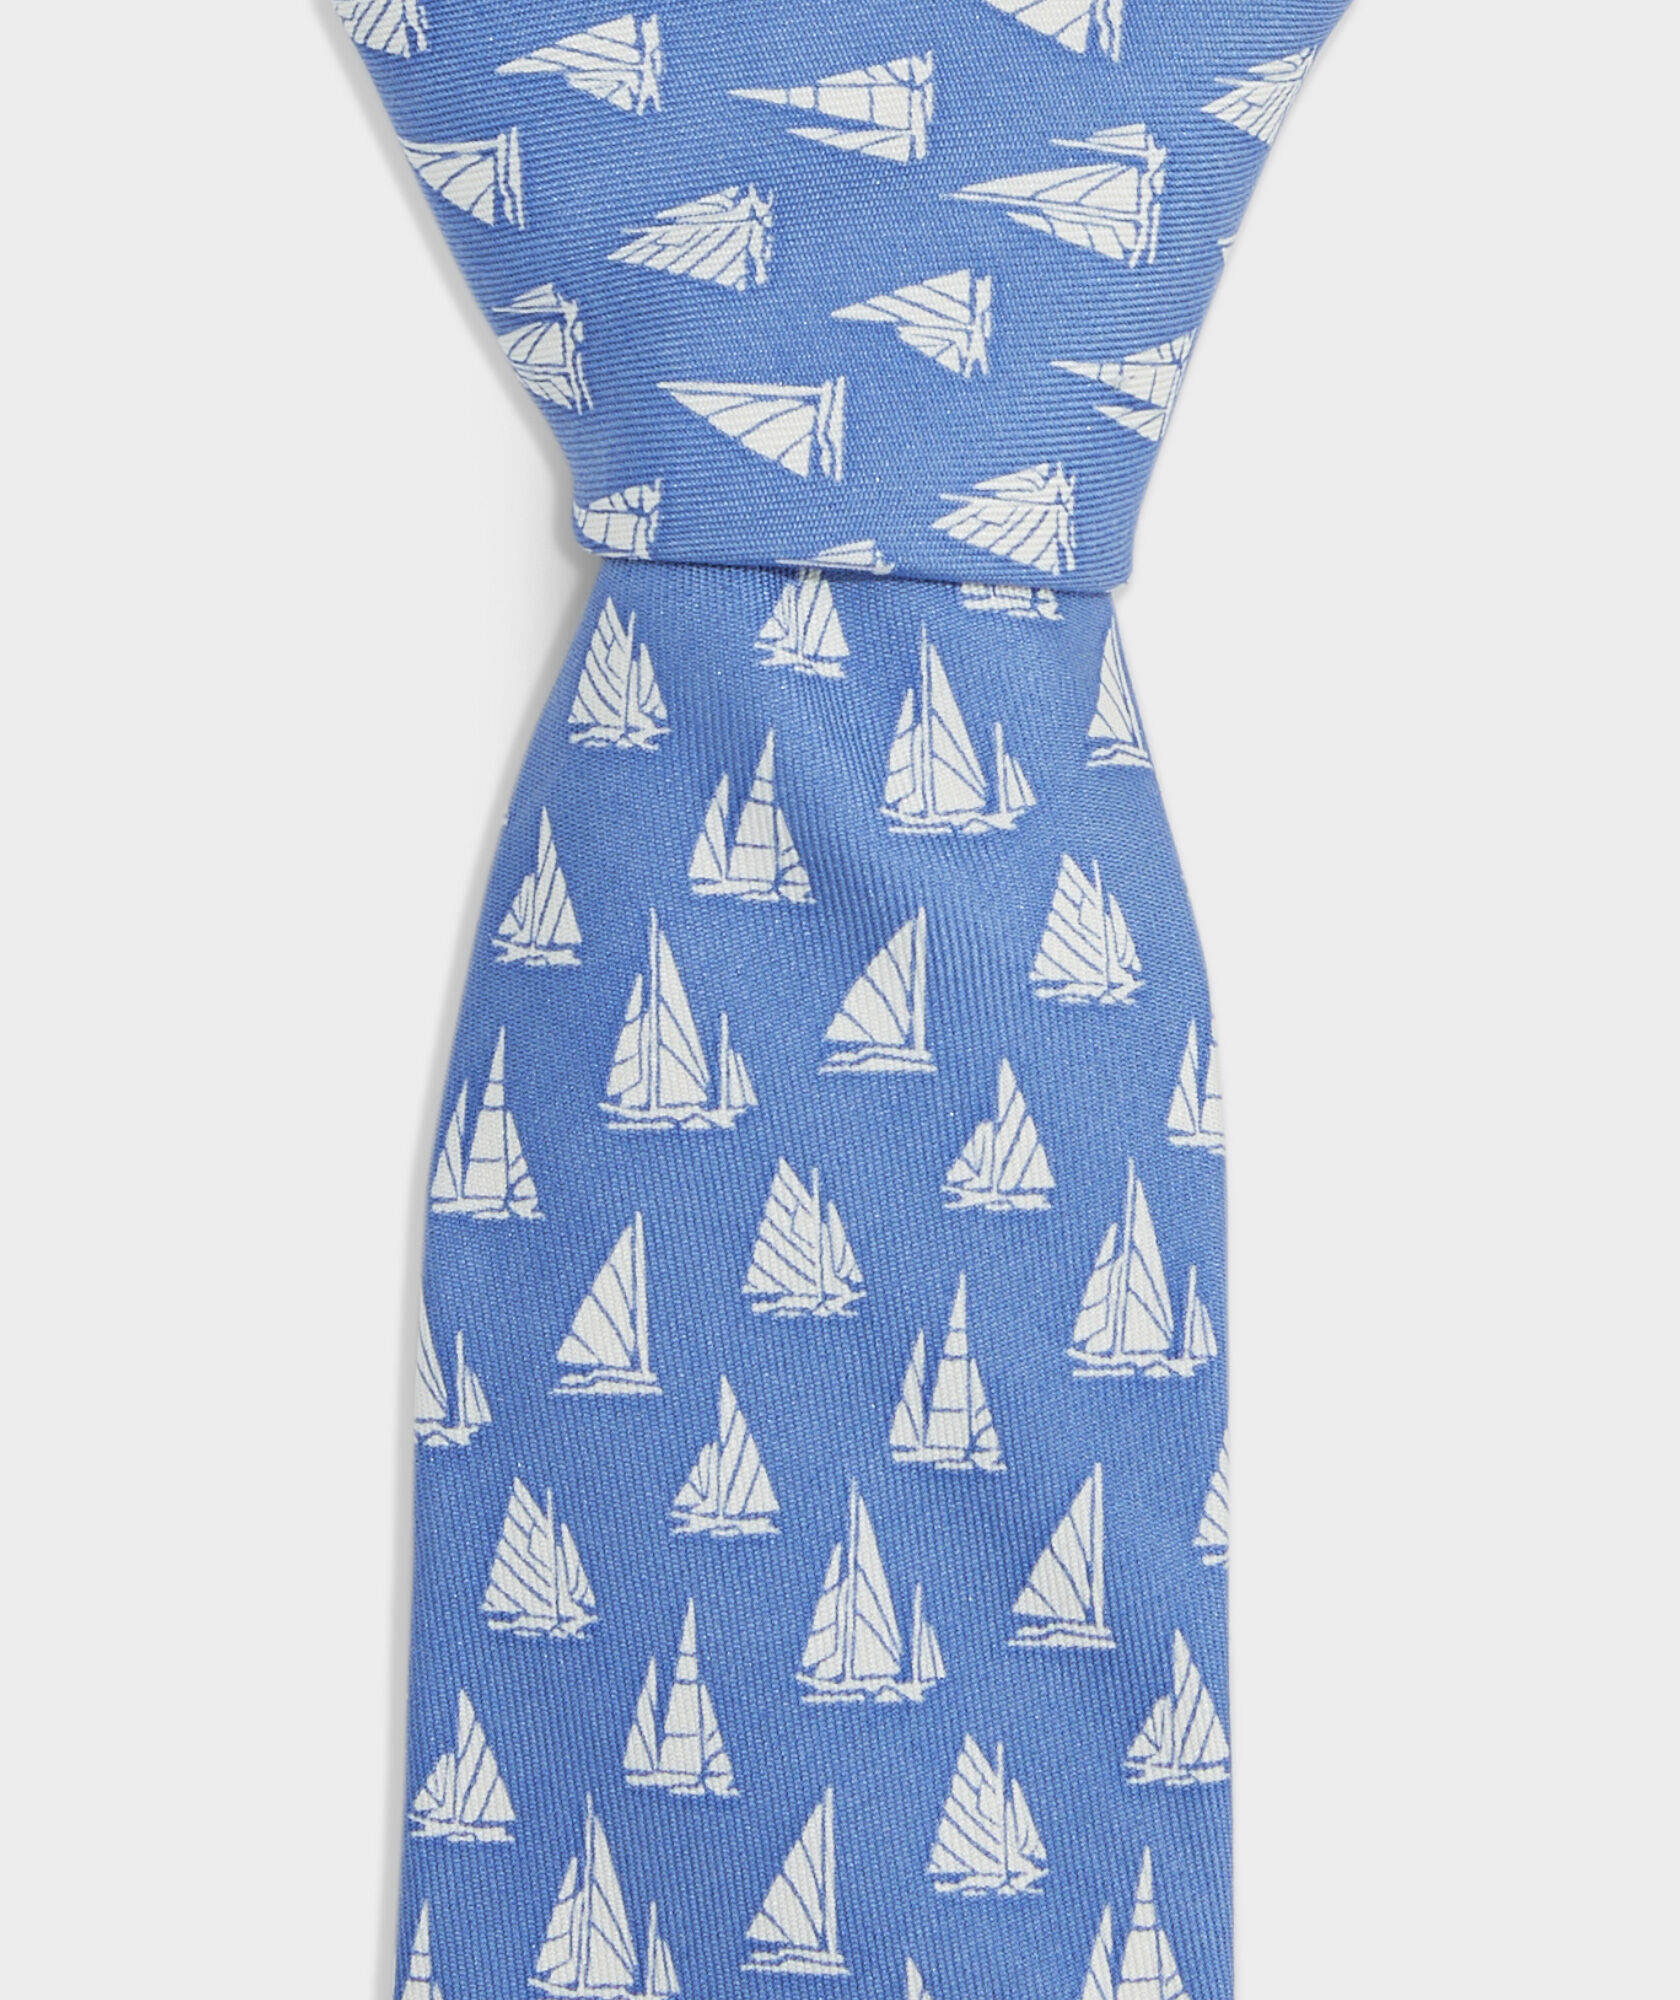 Shop Boys' Boat Parade Printed Tie at vineyard vines